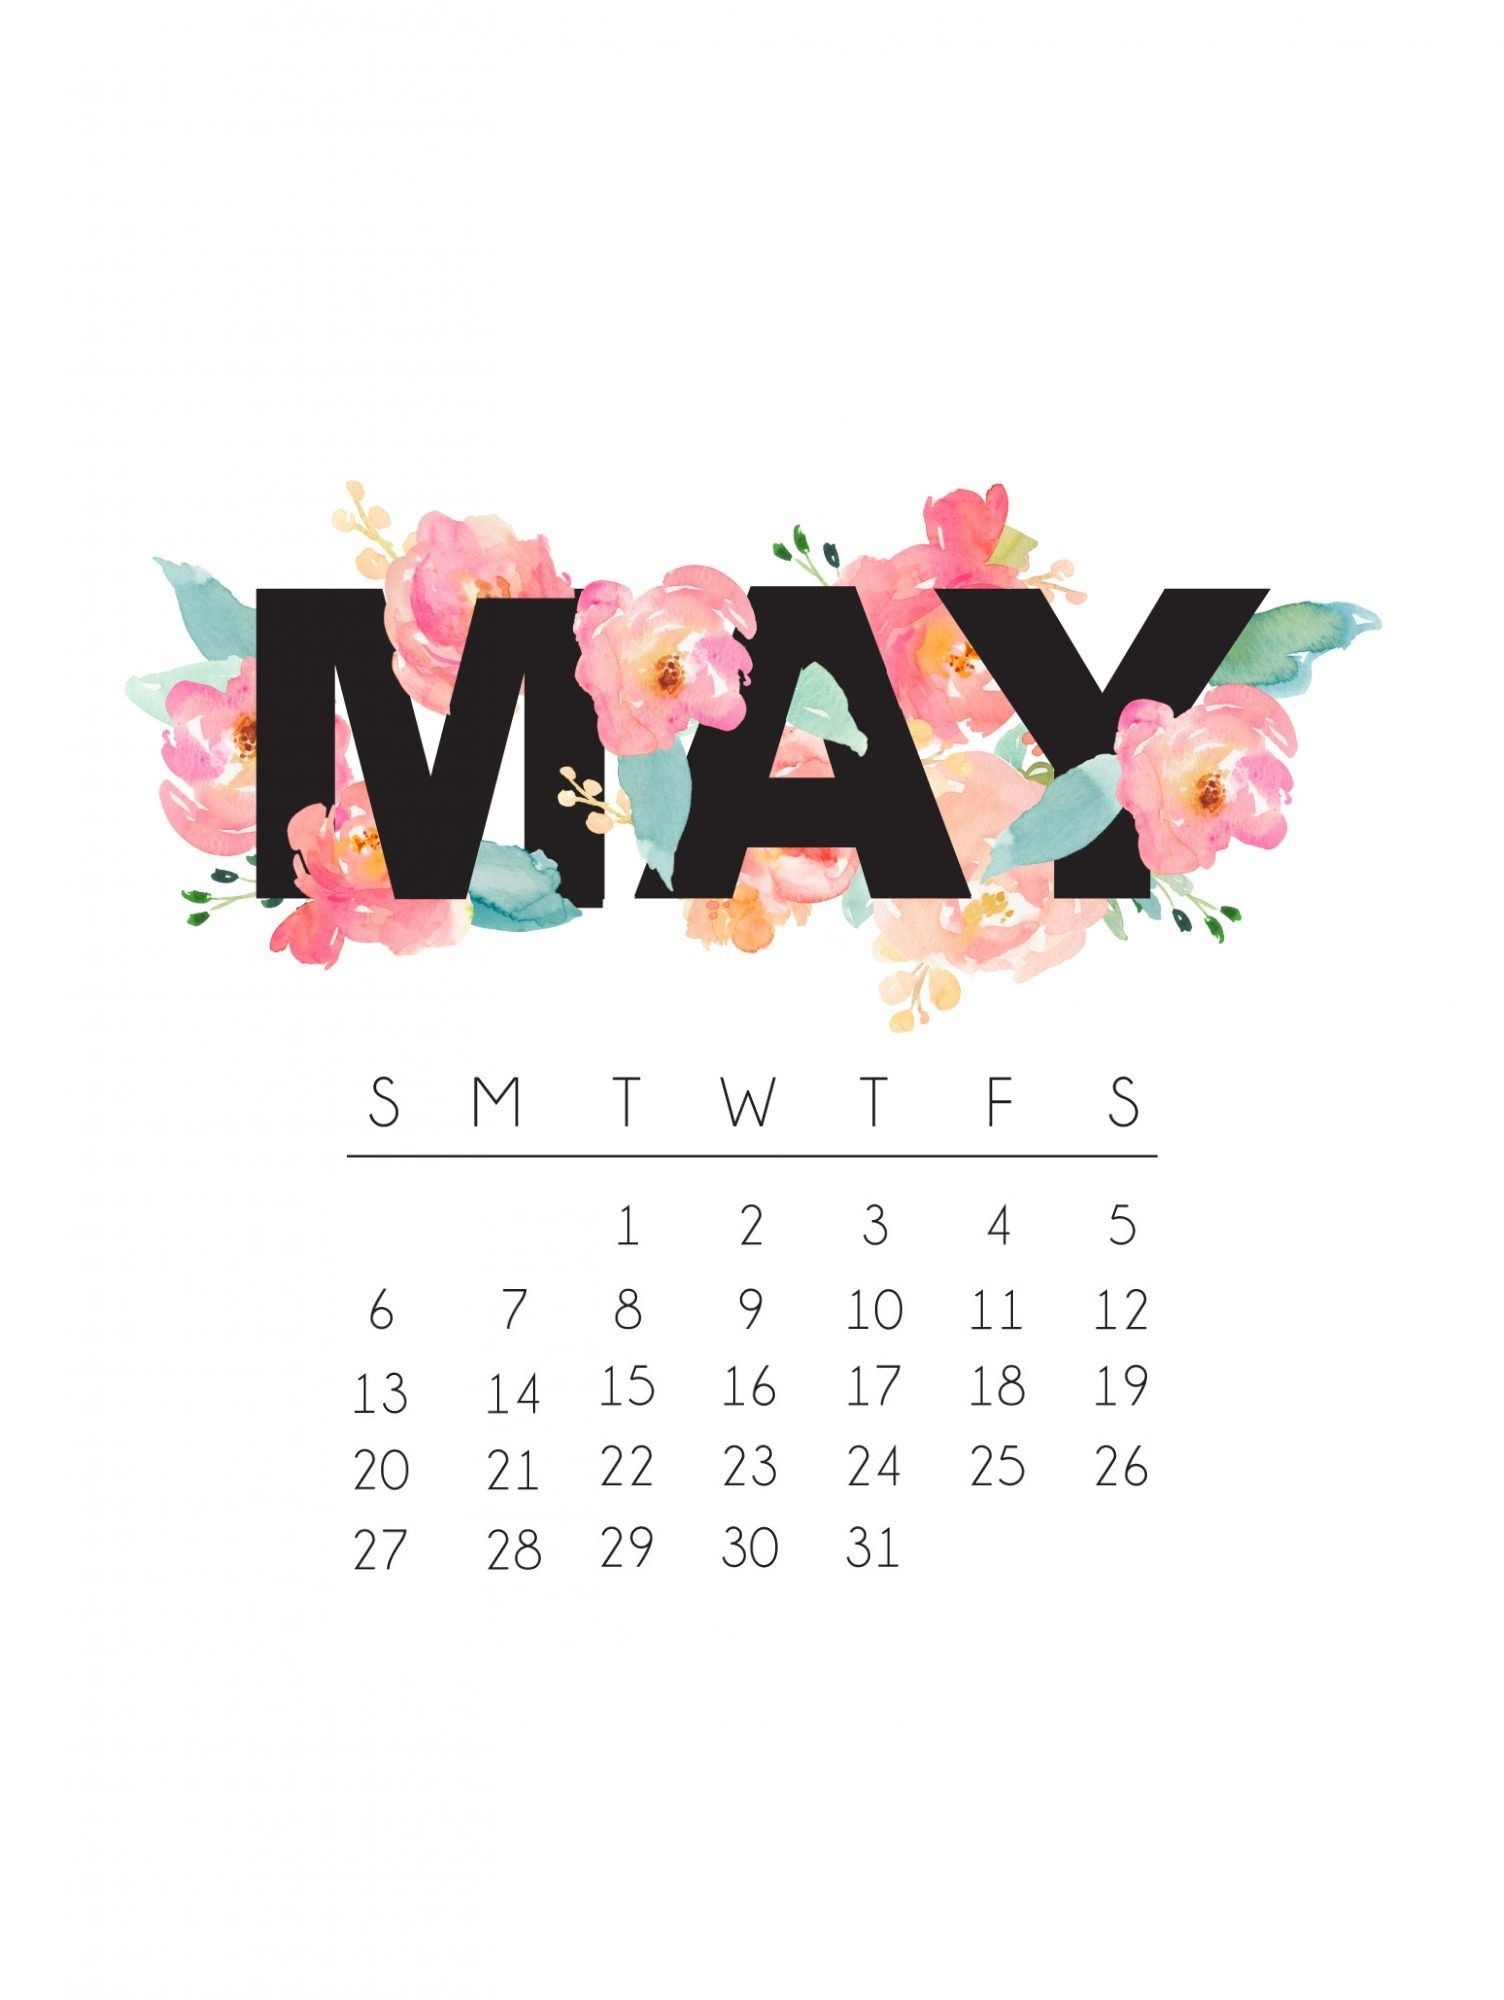 1504x2000 May 2018 Calendar Tumblr With IPhone Wallpaper MaxCalendars Pinterest